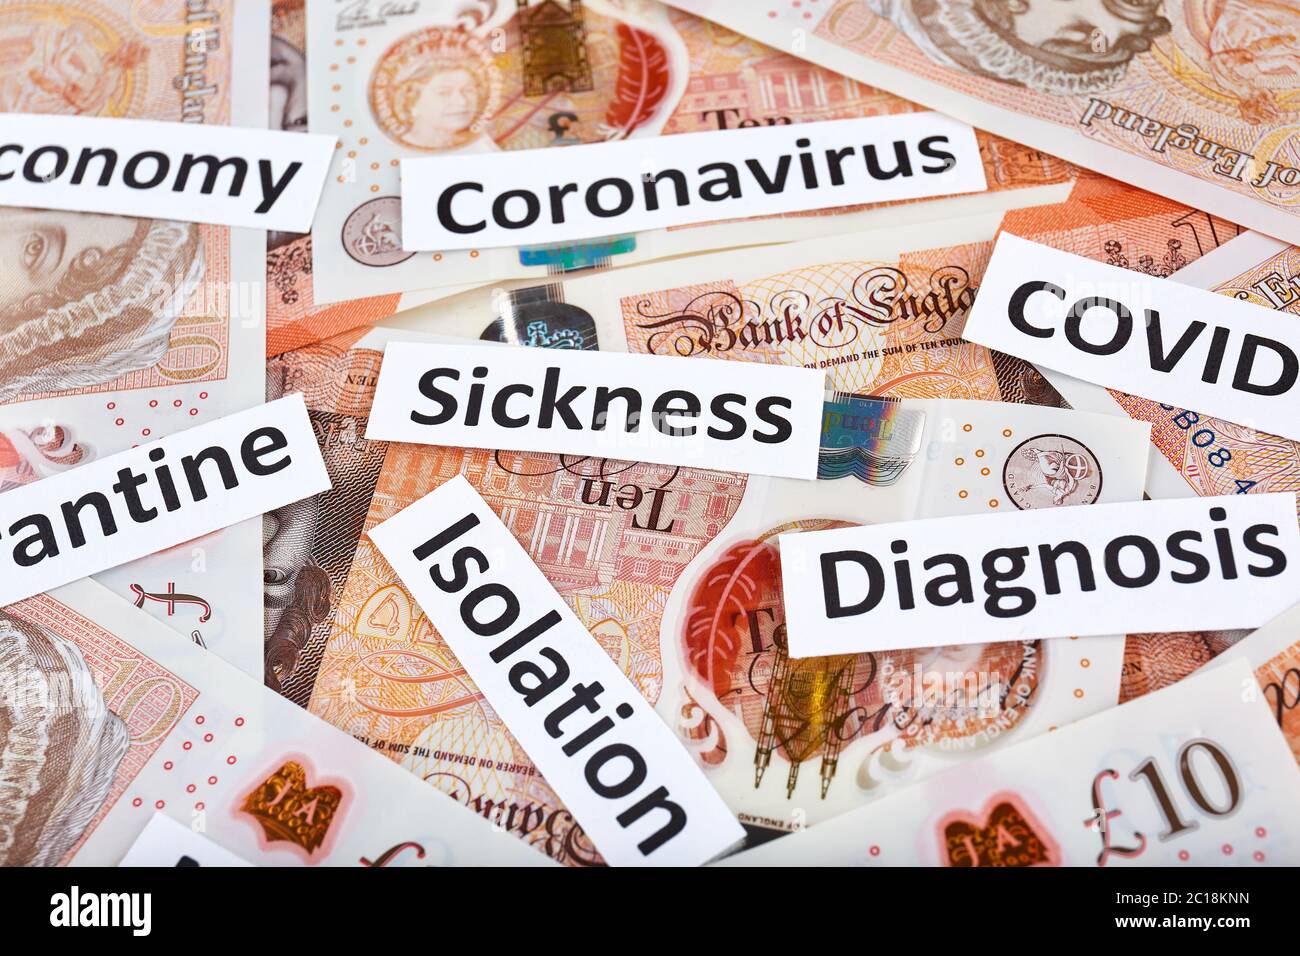 Coronavirus, COVID-19 headline clippings on United Kingdome 10 pounds banknotes. Stock Photo